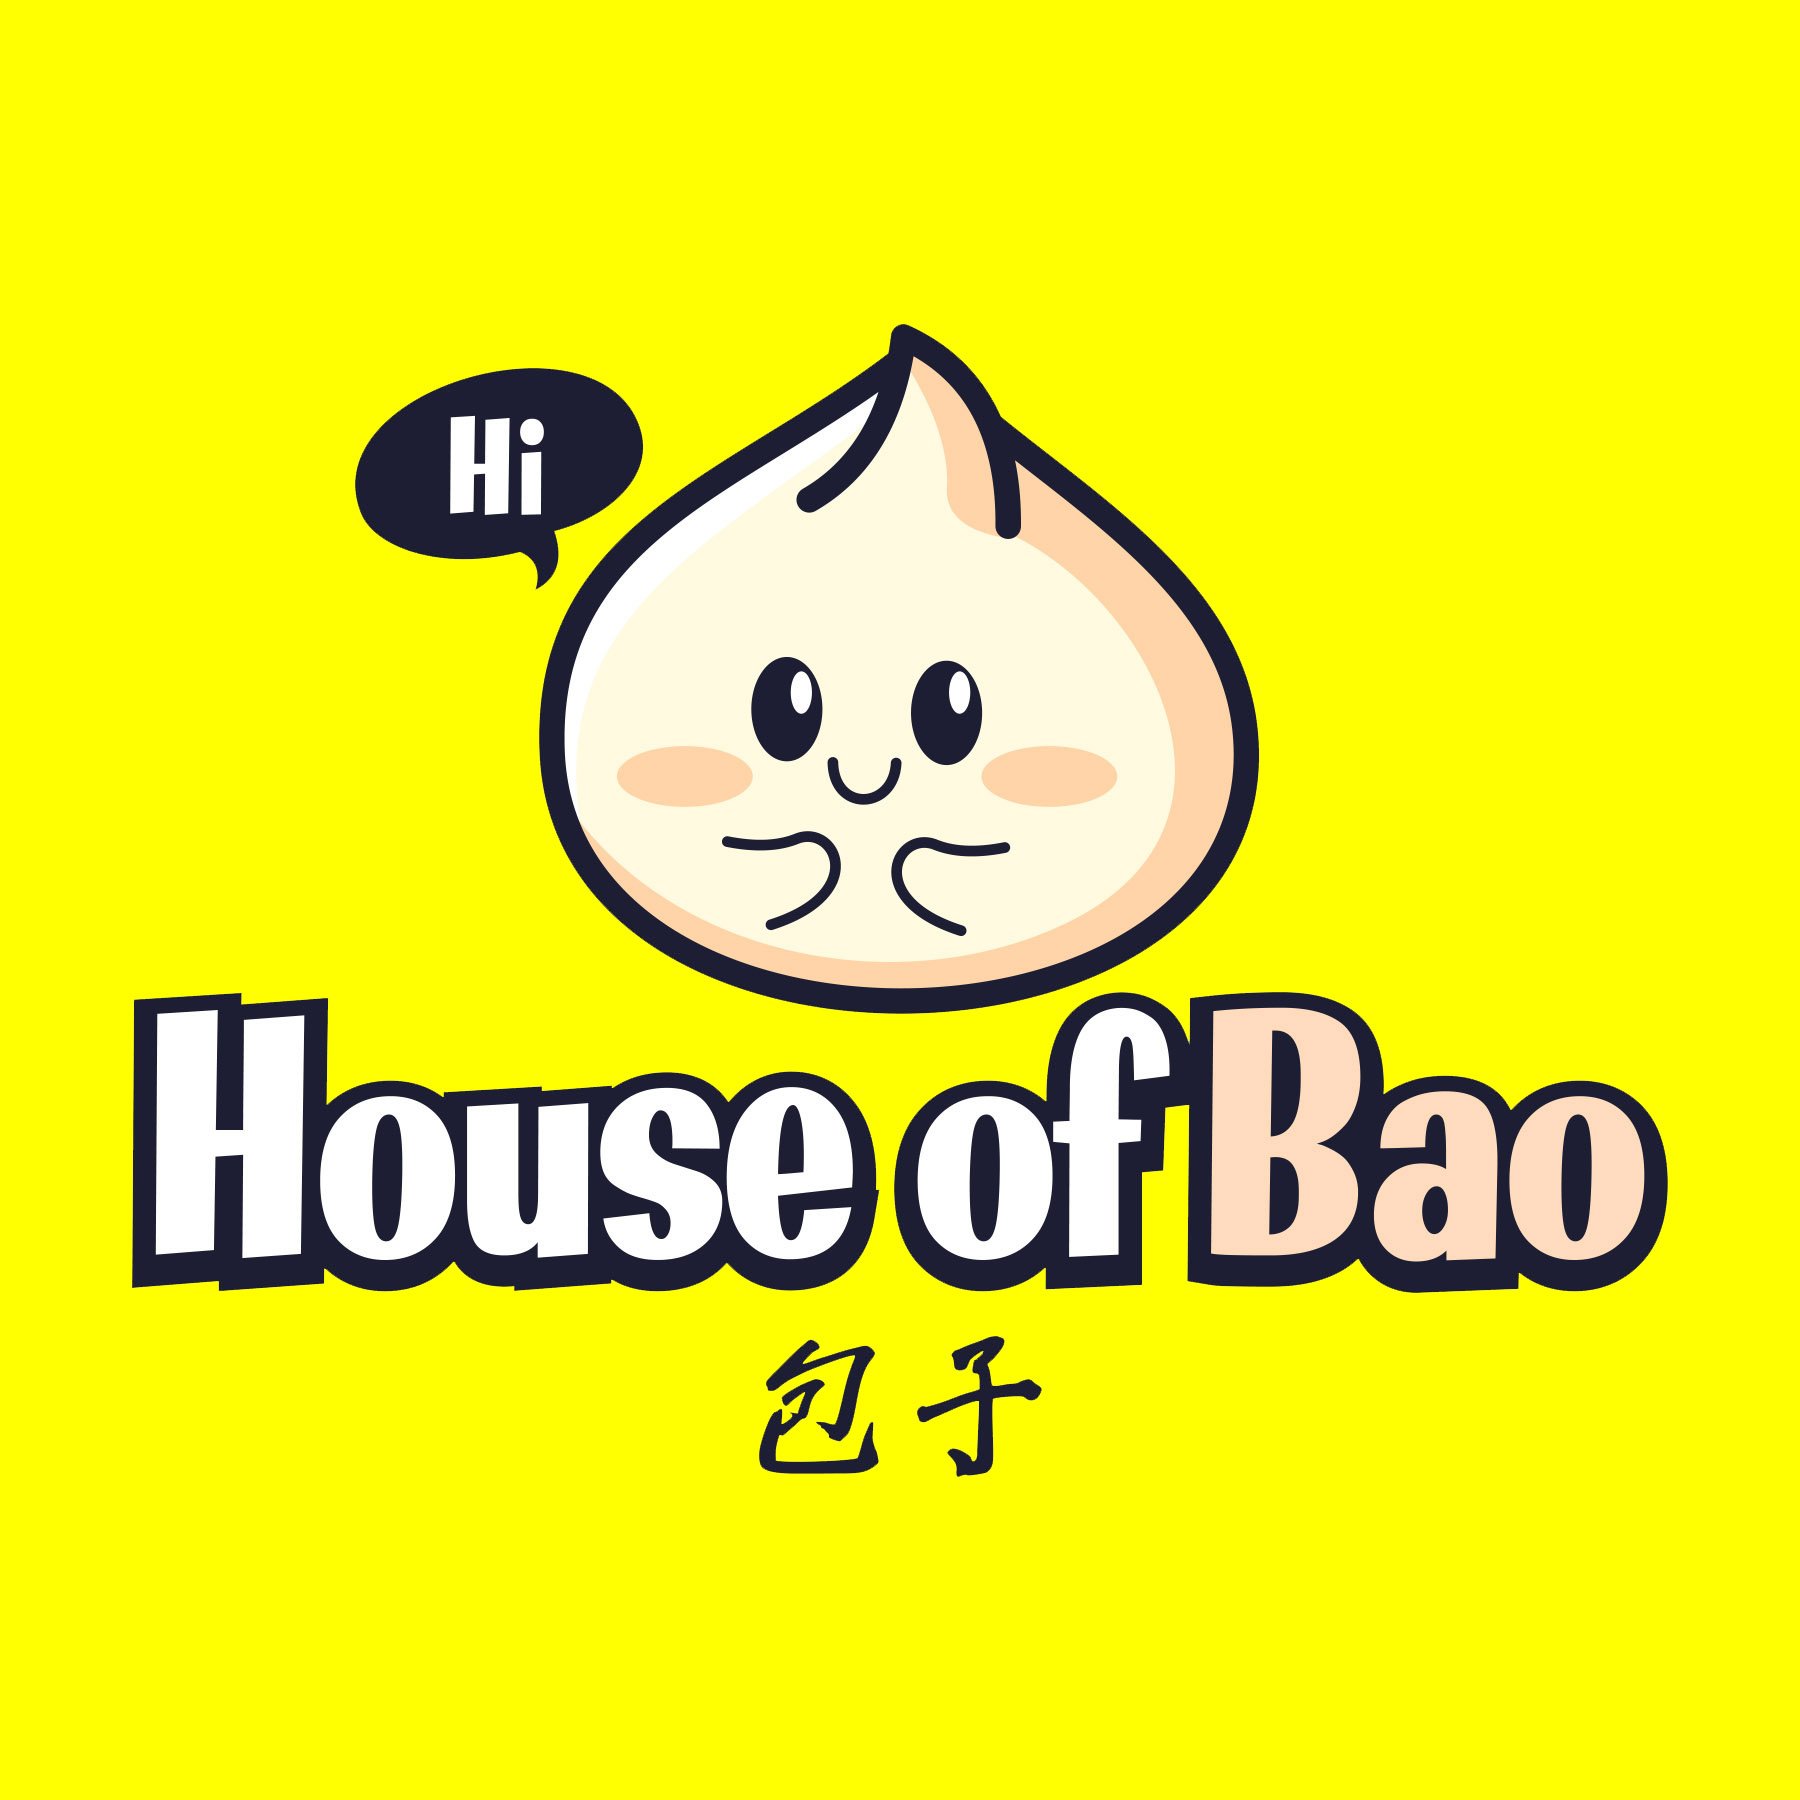 HouseofBao_logo.jpg